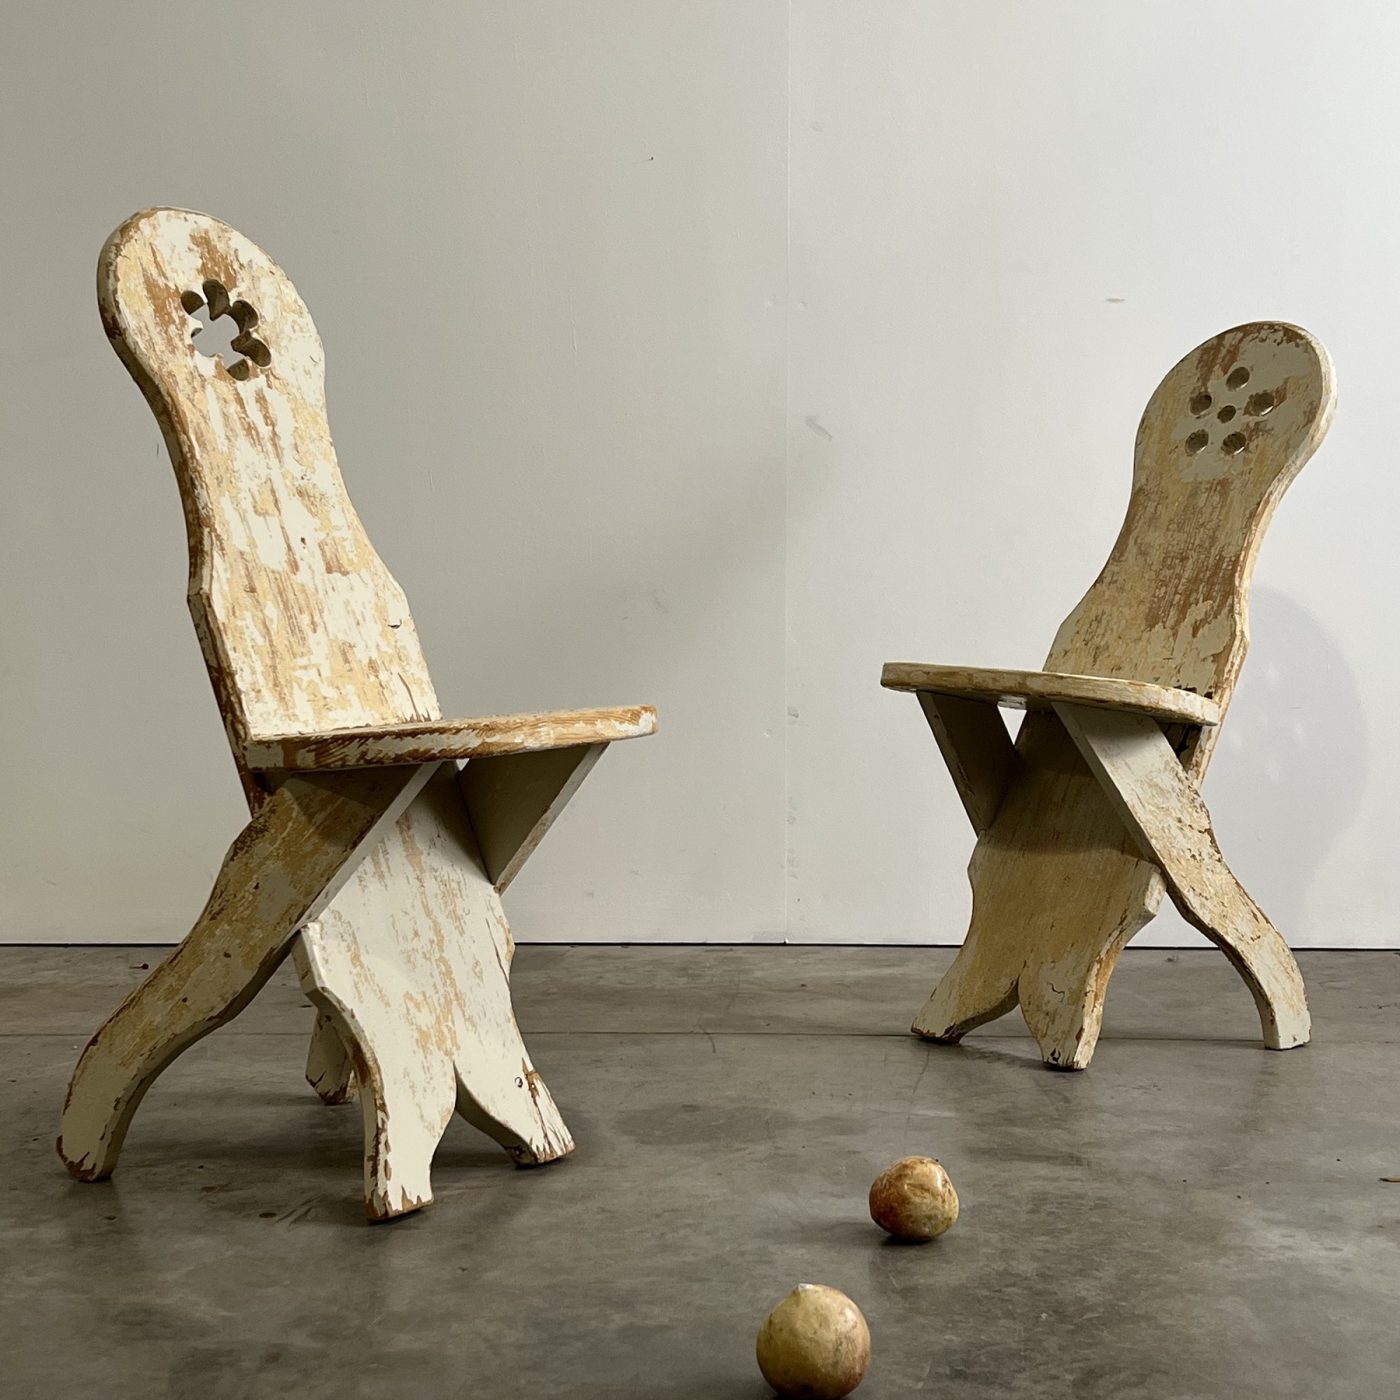 objet-vagabond-painnted-chairs0002